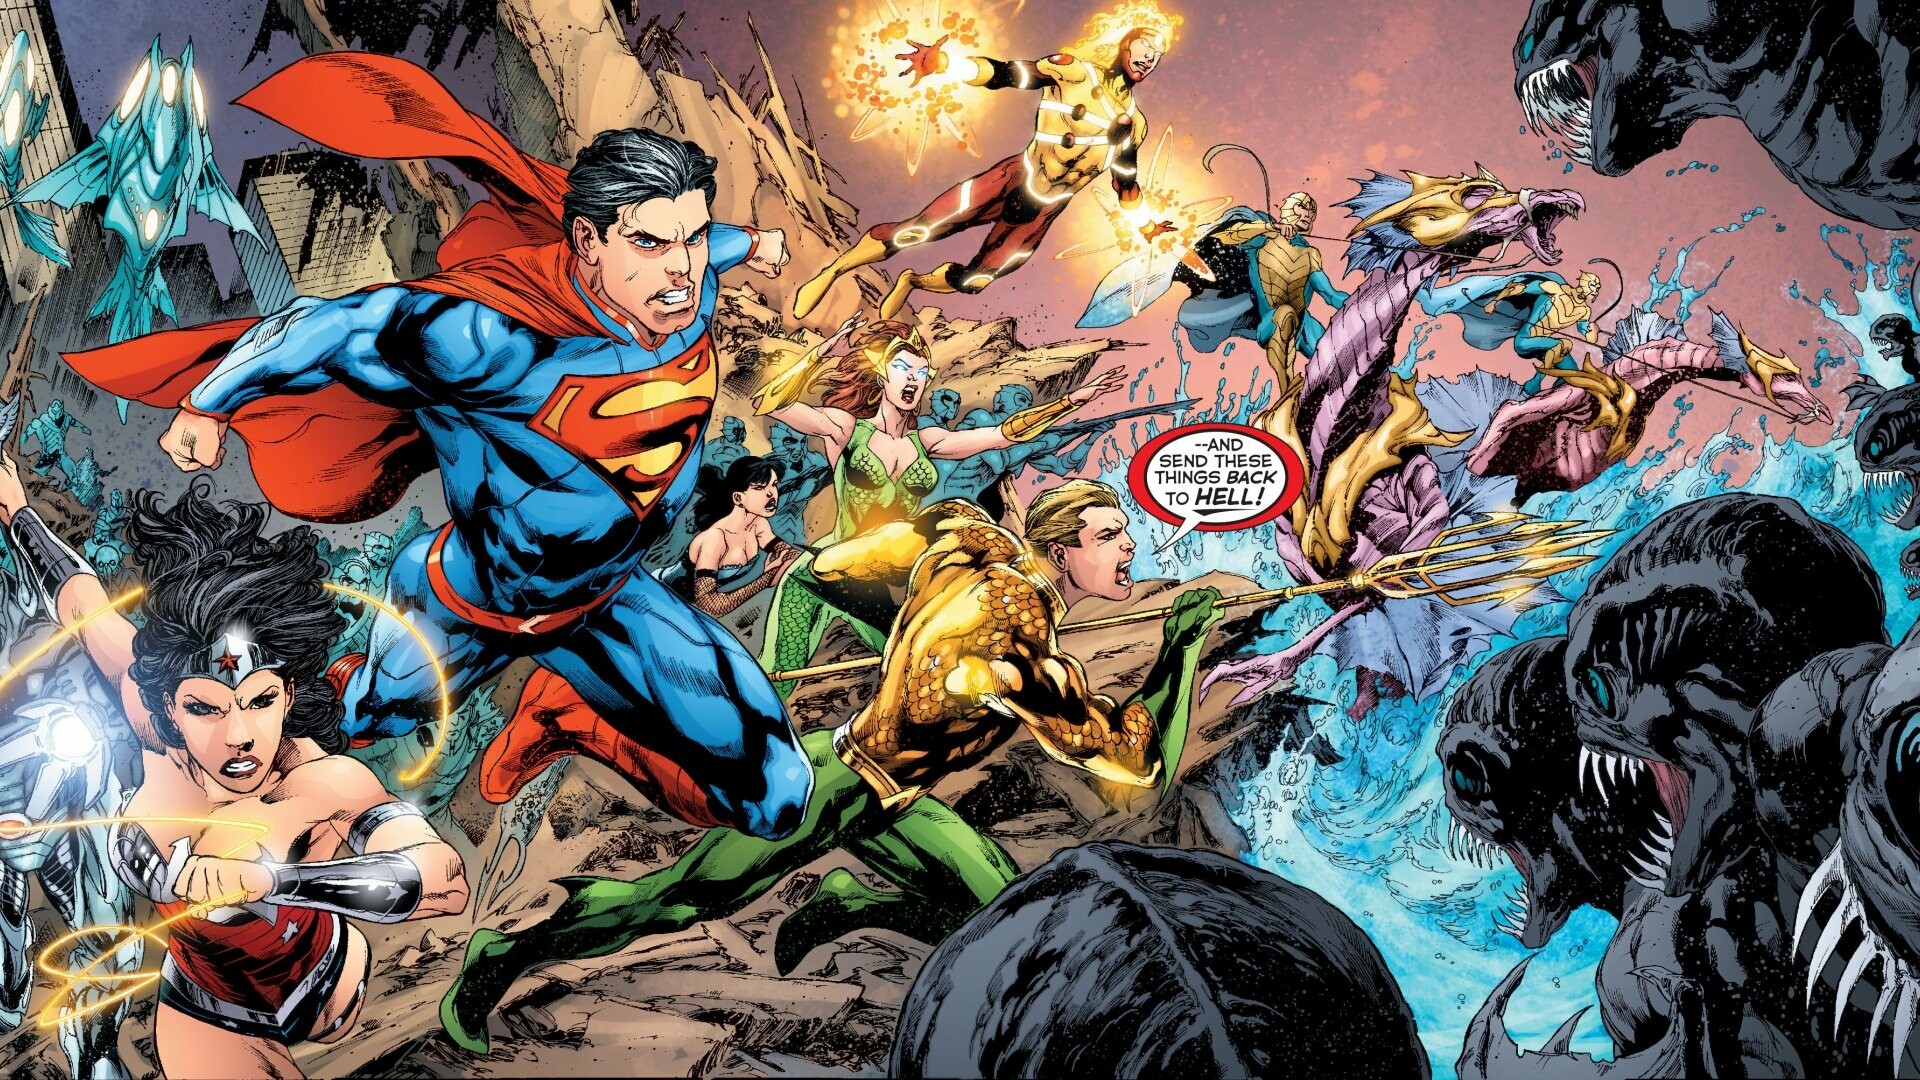 DC Heroes: Justice League, Action, Fighting, Adventure, Superheroes, Superman, Wonder Woman, Aquaman. 1920x1080 Full HD Wallpaper.